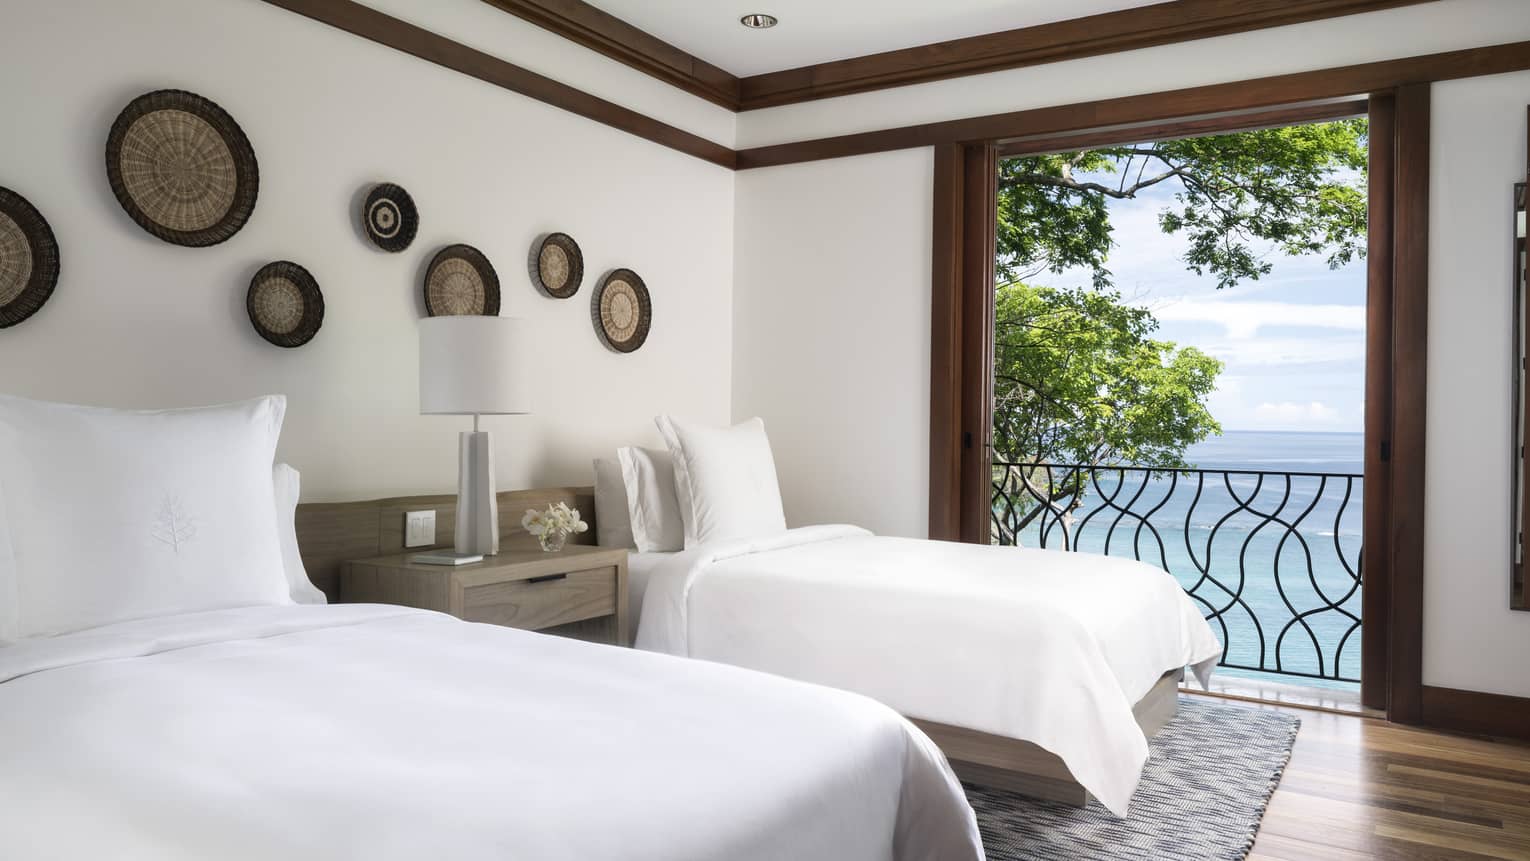 Twin beds with white linens beside open door to iron terrace, ocean views 